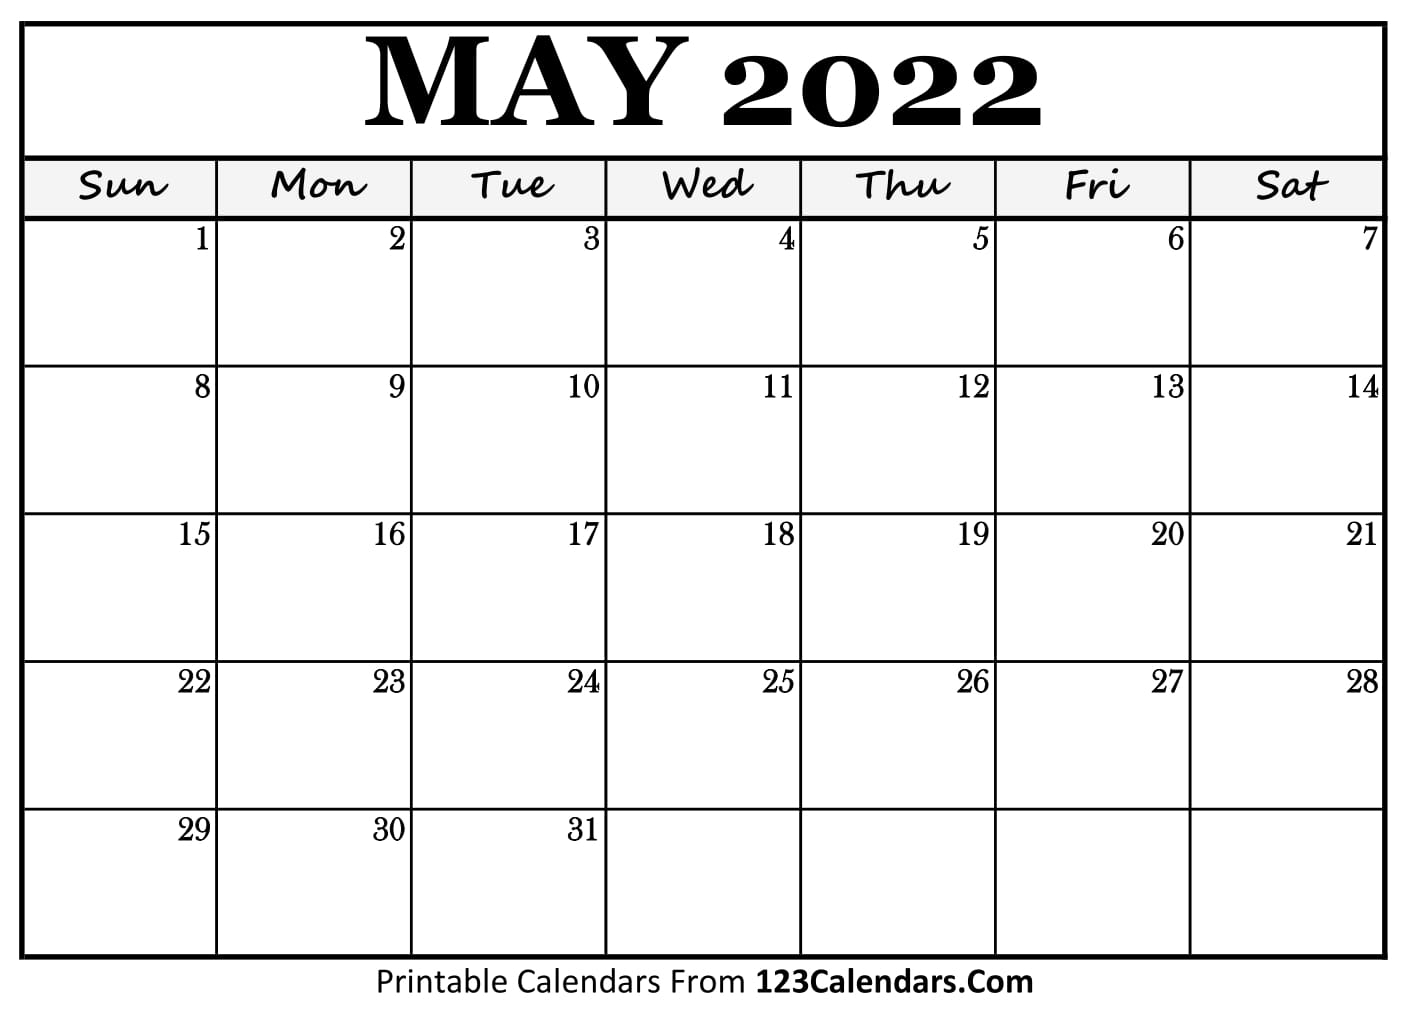 May 2022 Calendar Template Printable May 2022 Calendar Templates - 123Calendars.com